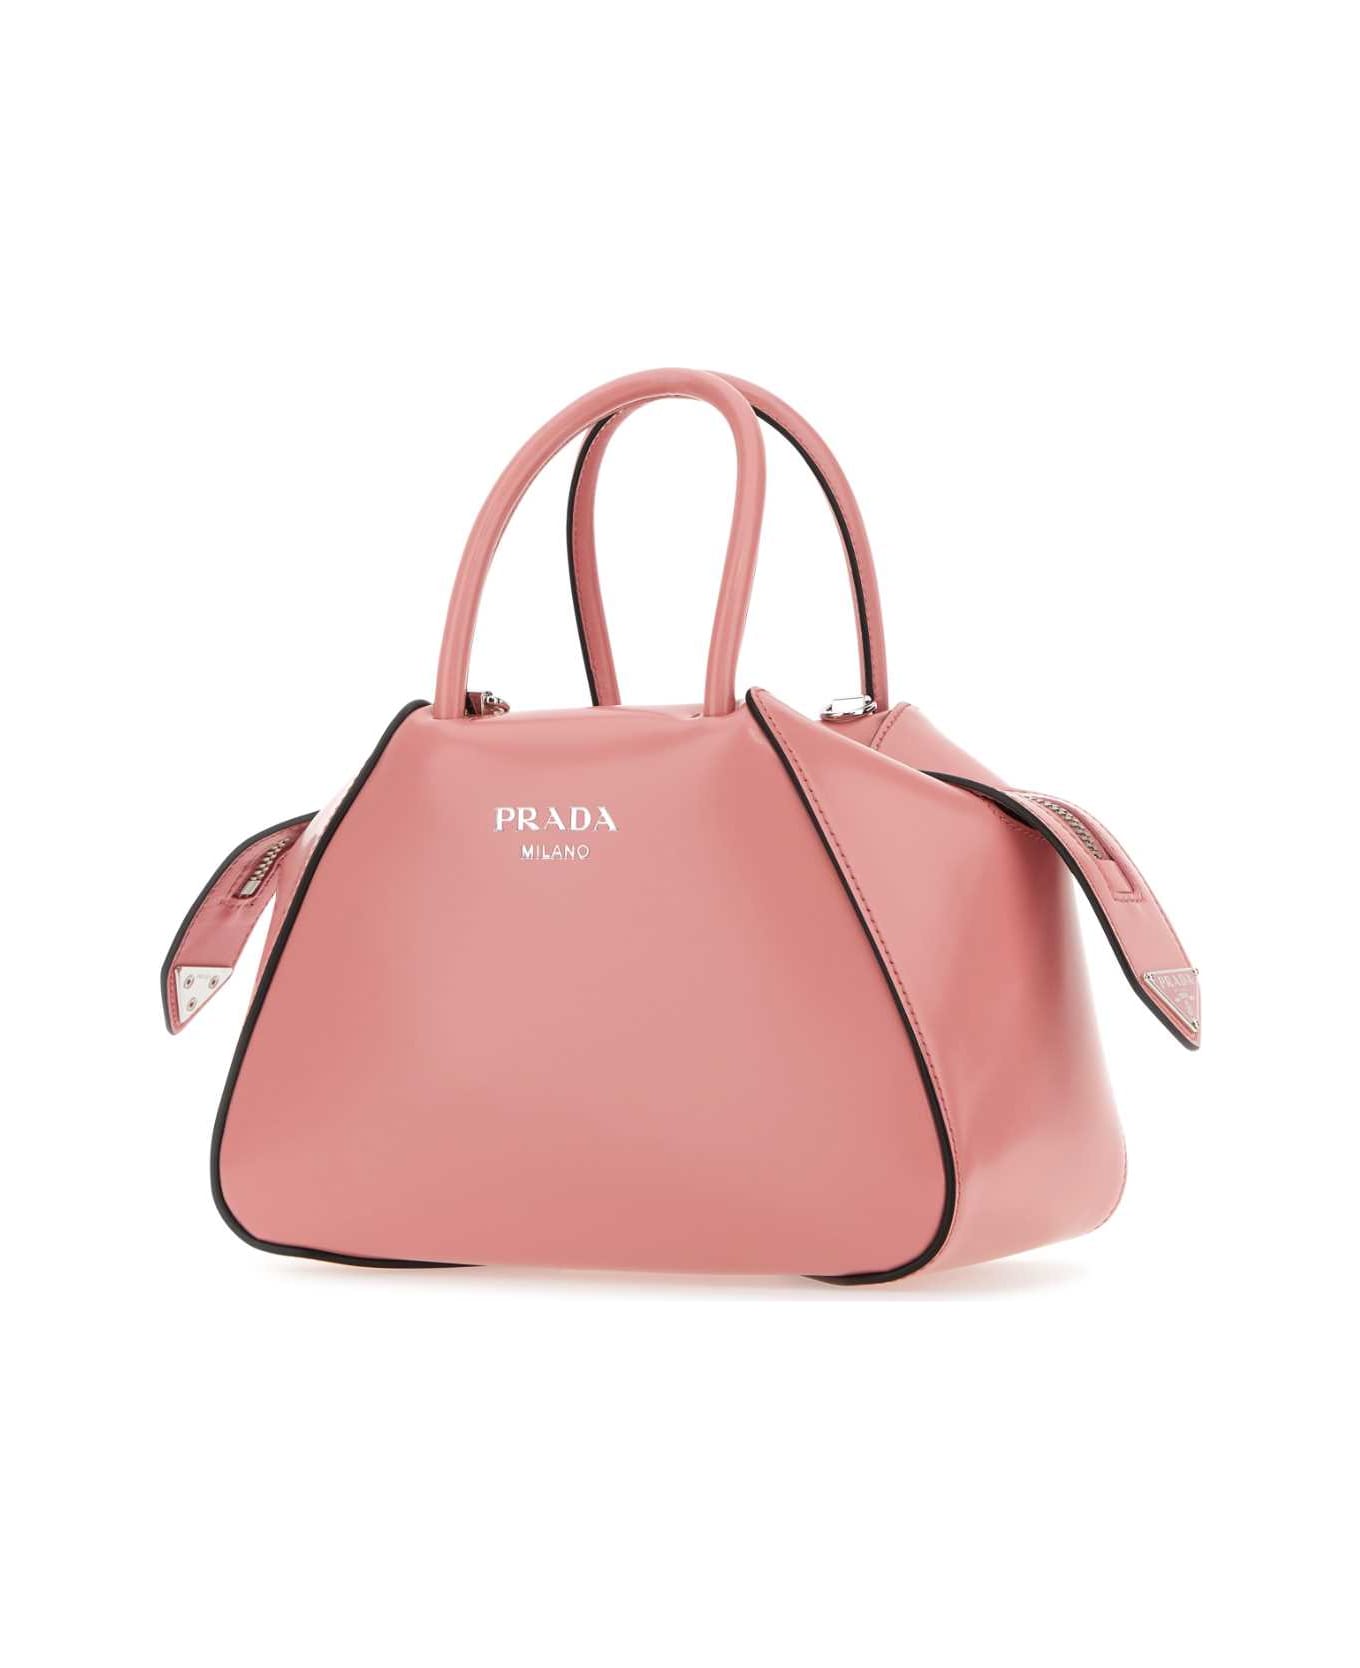 Prada Pink Leather Handbag - PETALO